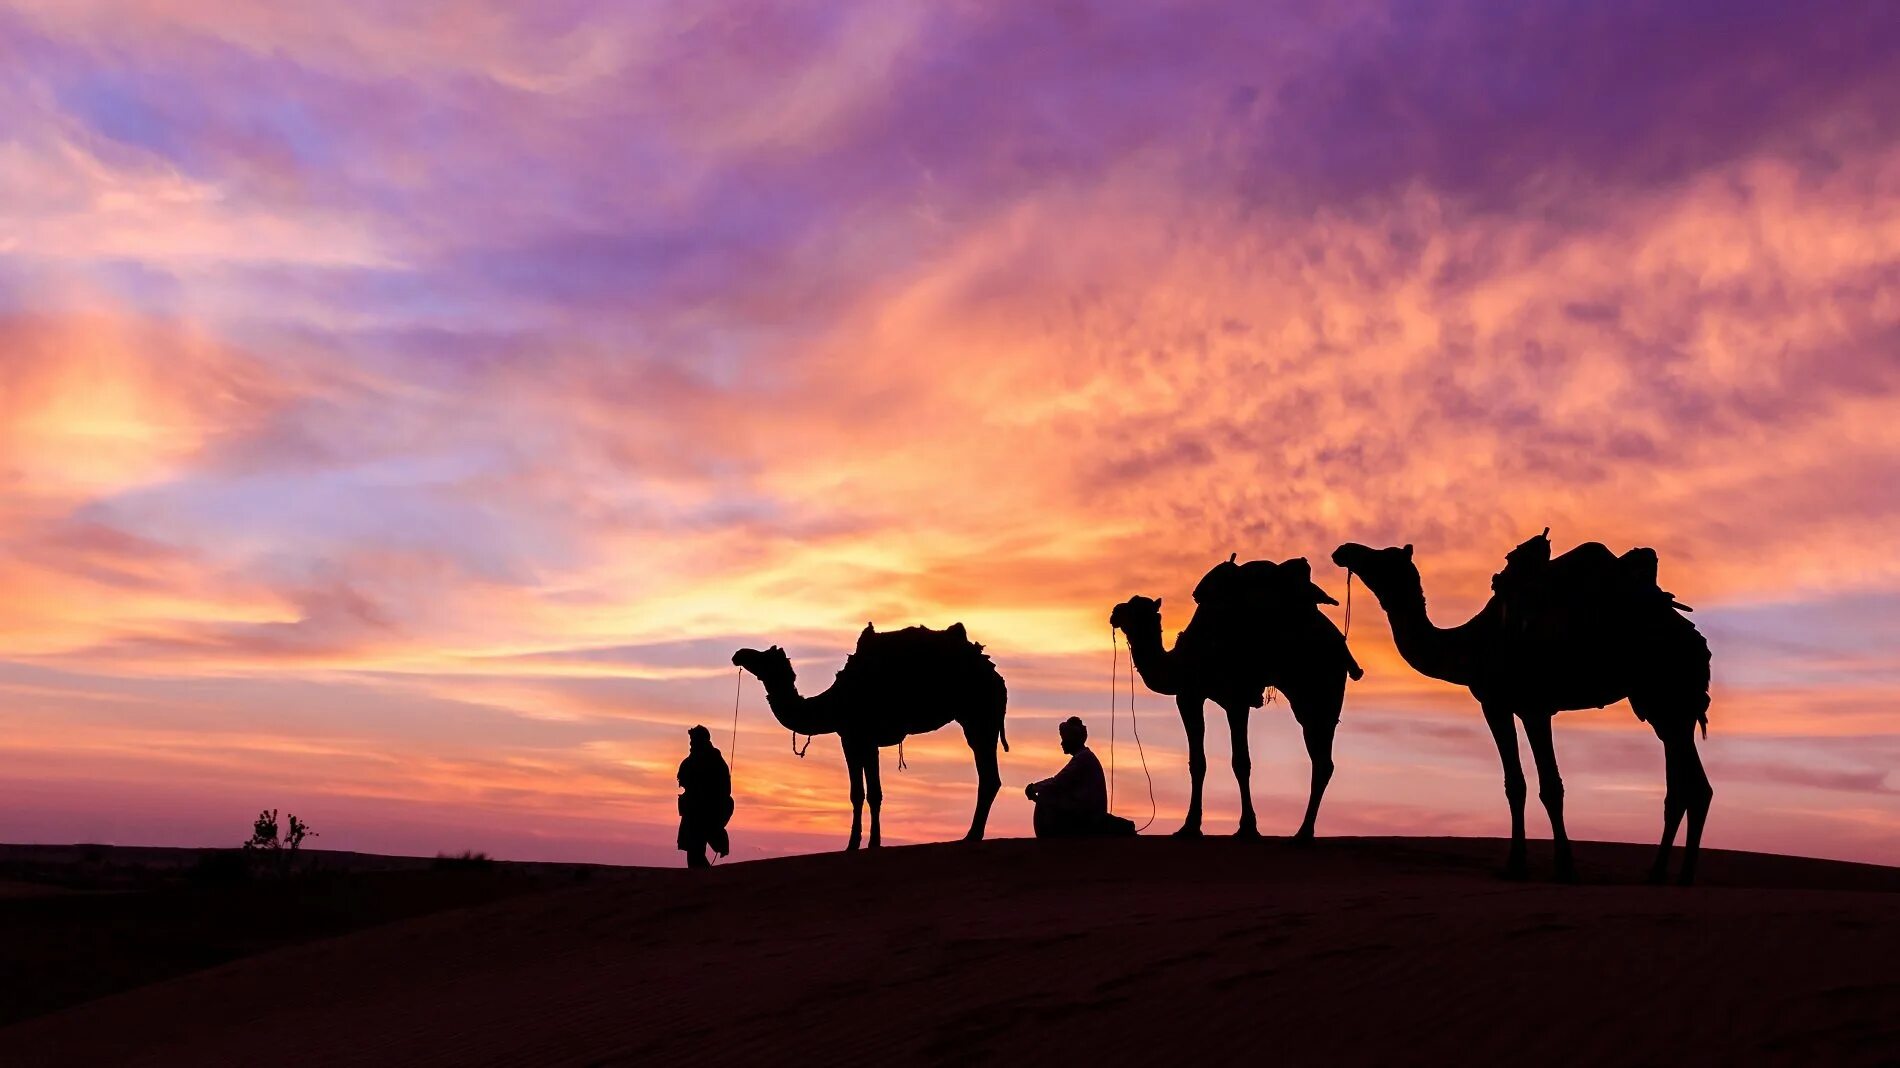 Караван цветов. Караван с верблюдами в пустыне. Караван Аравийской пустыне ОАЭ. Арабы с караваном в пустыне. Караван верблюдов в пустыне.